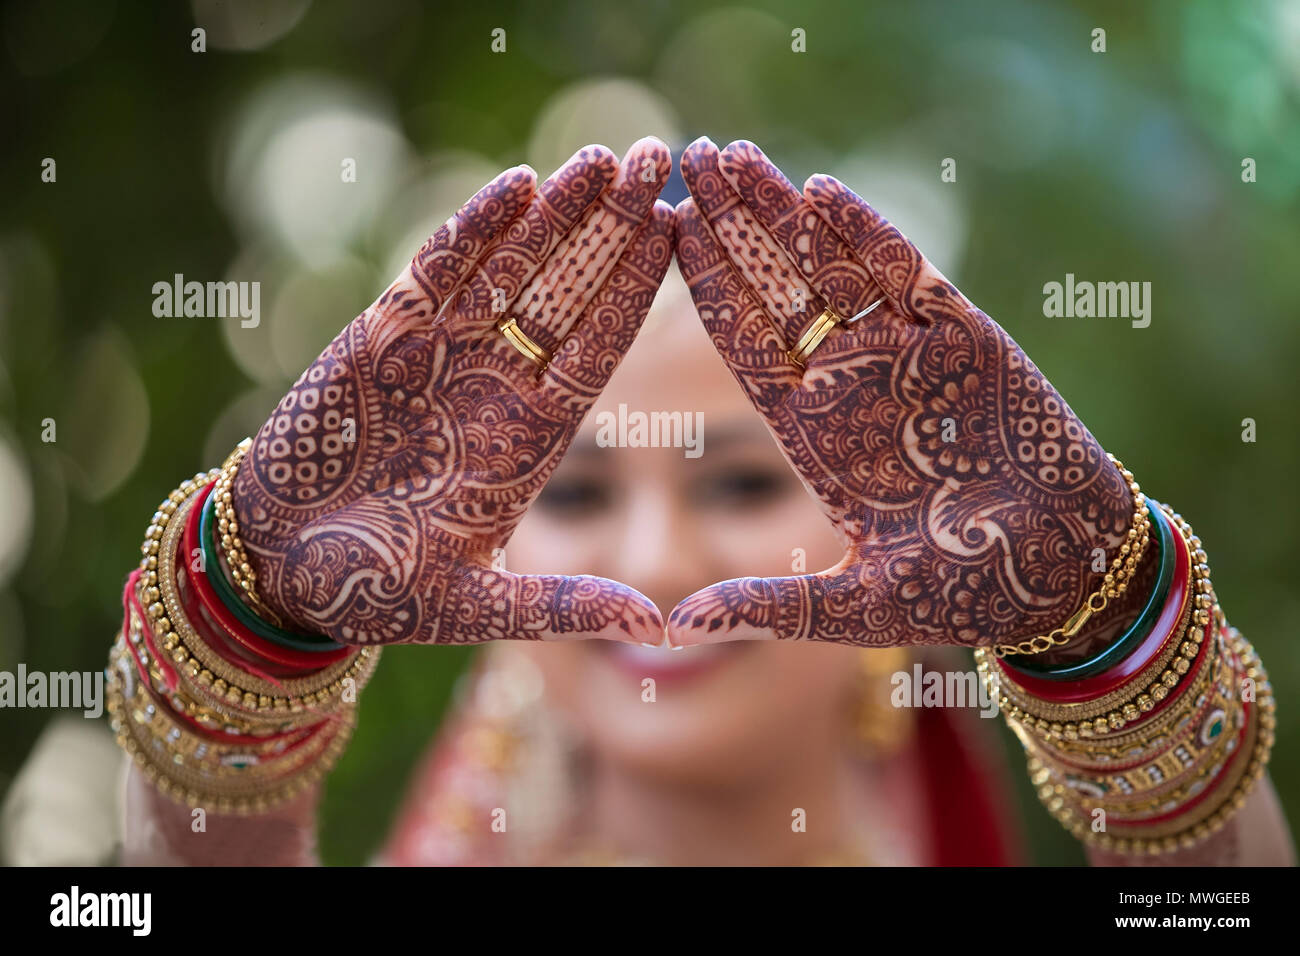 https://c8.alamy.com/comp/MWGEEB/pakistani-indian-bride-wedding-making-a-heart-shape-her-hand-style-and-beautiful-mehndi-design-MWGEEB.jpg